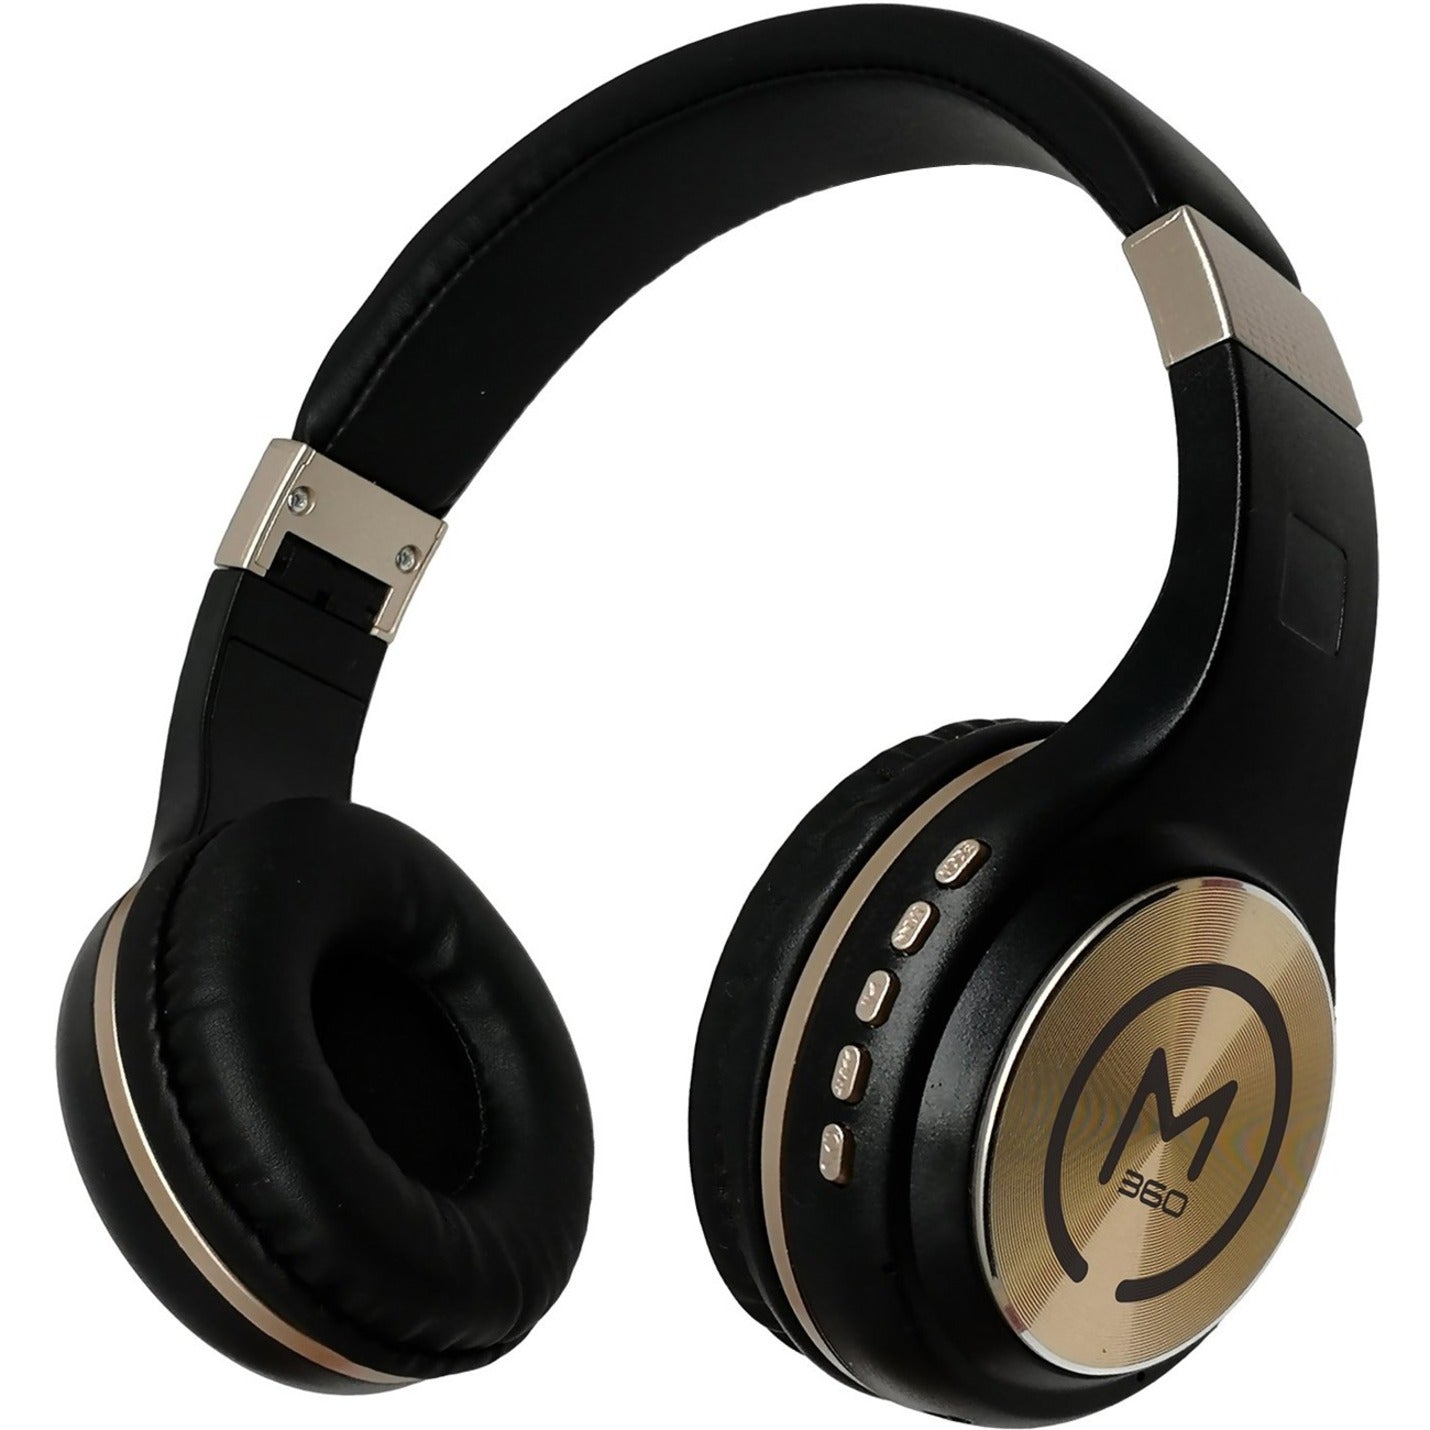 Morpheus 360 HP5500G Wireless Stereo Bluetooth Headphones, Black/Gold, Built-in Microphone